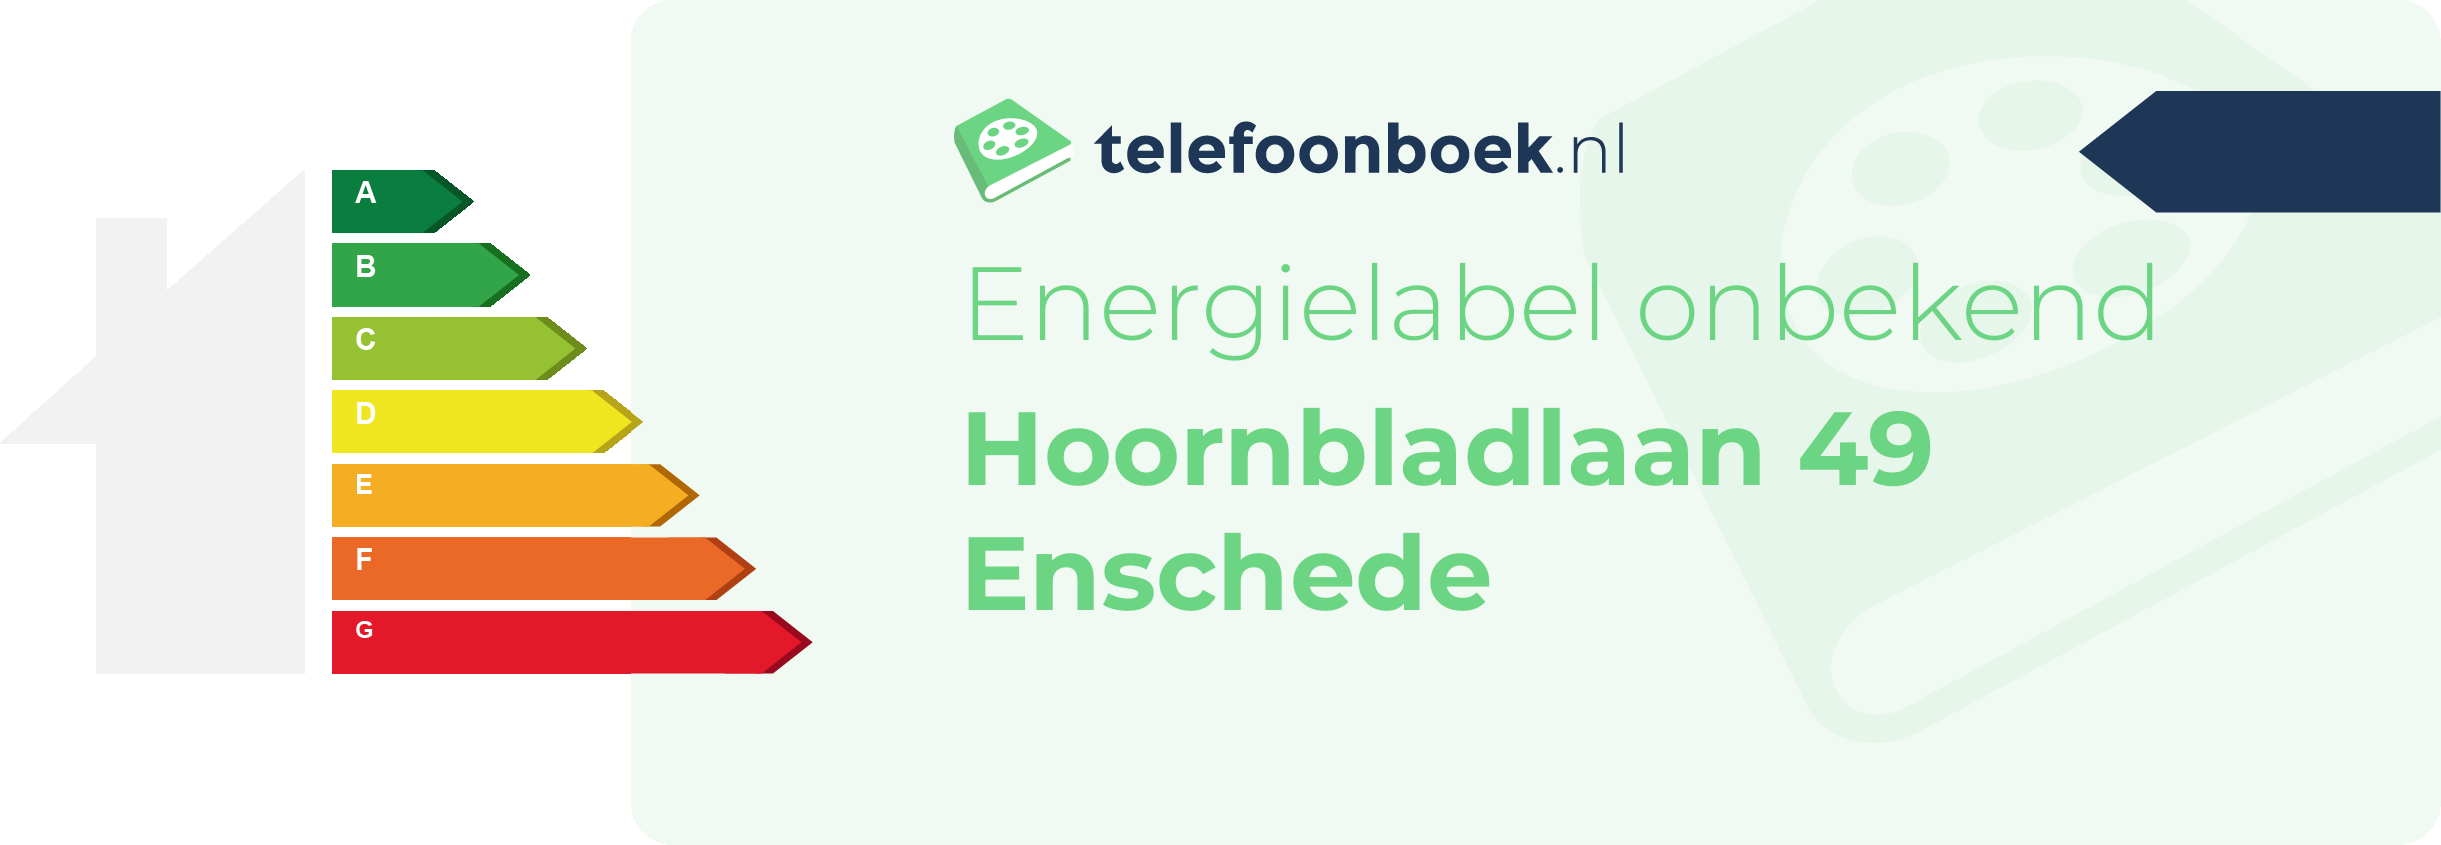 Energielabel Hoornbladlaan 49 Enschede